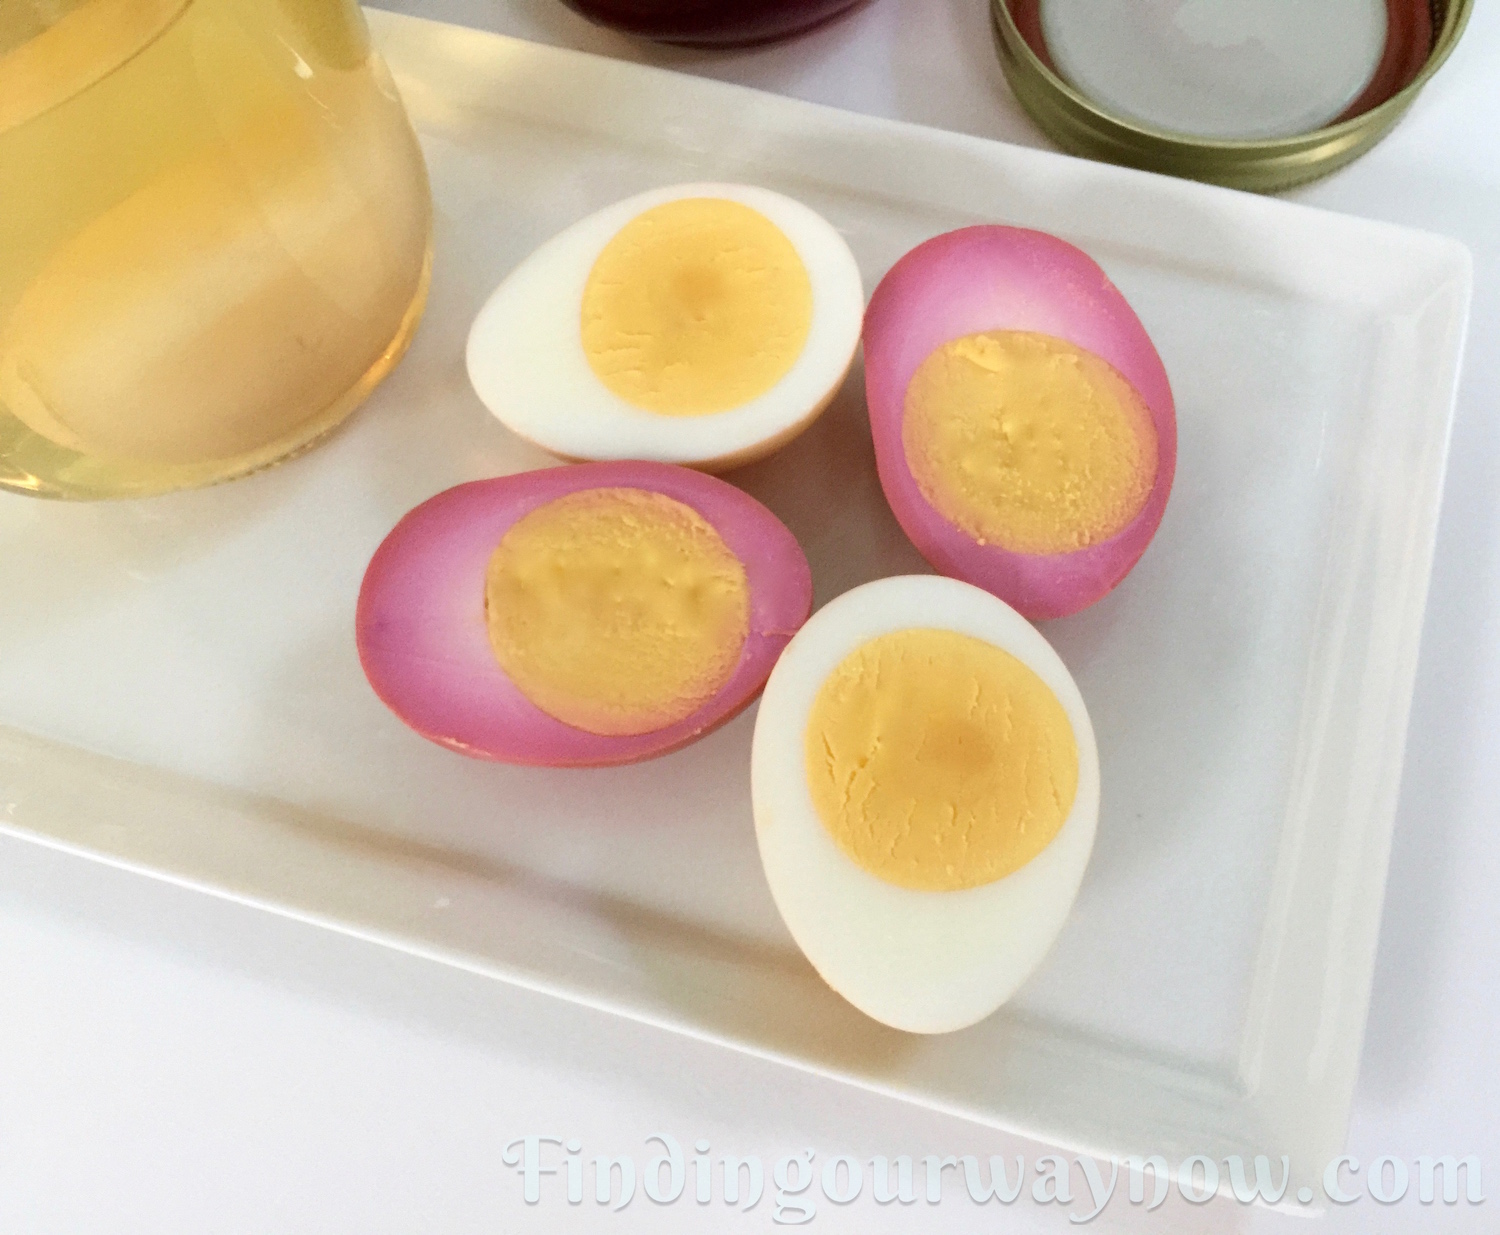 Pickled Eggs, findingourwaynow.com